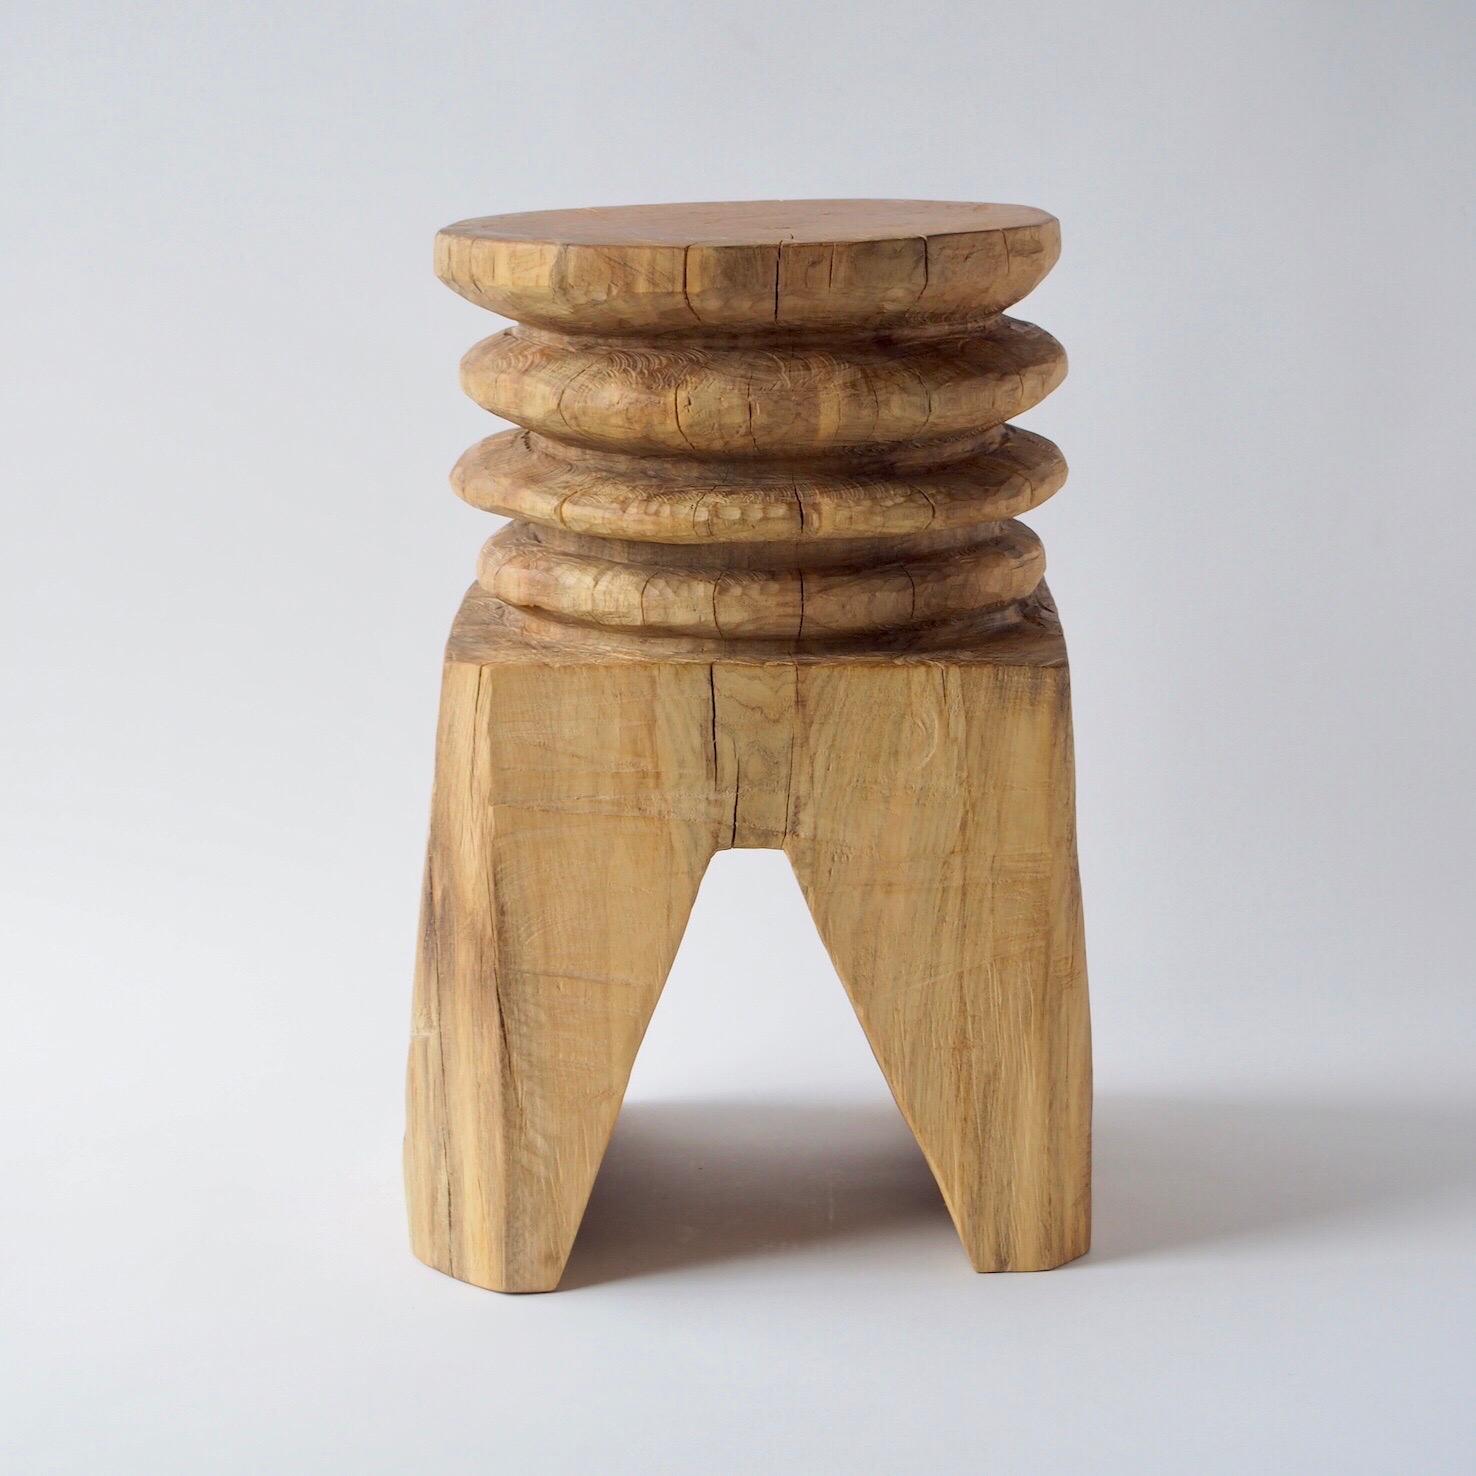 Japanese Hiroyuki Nishimura Zougei Sculptural Side Table Stool 26 Tribal Glamping For Sale